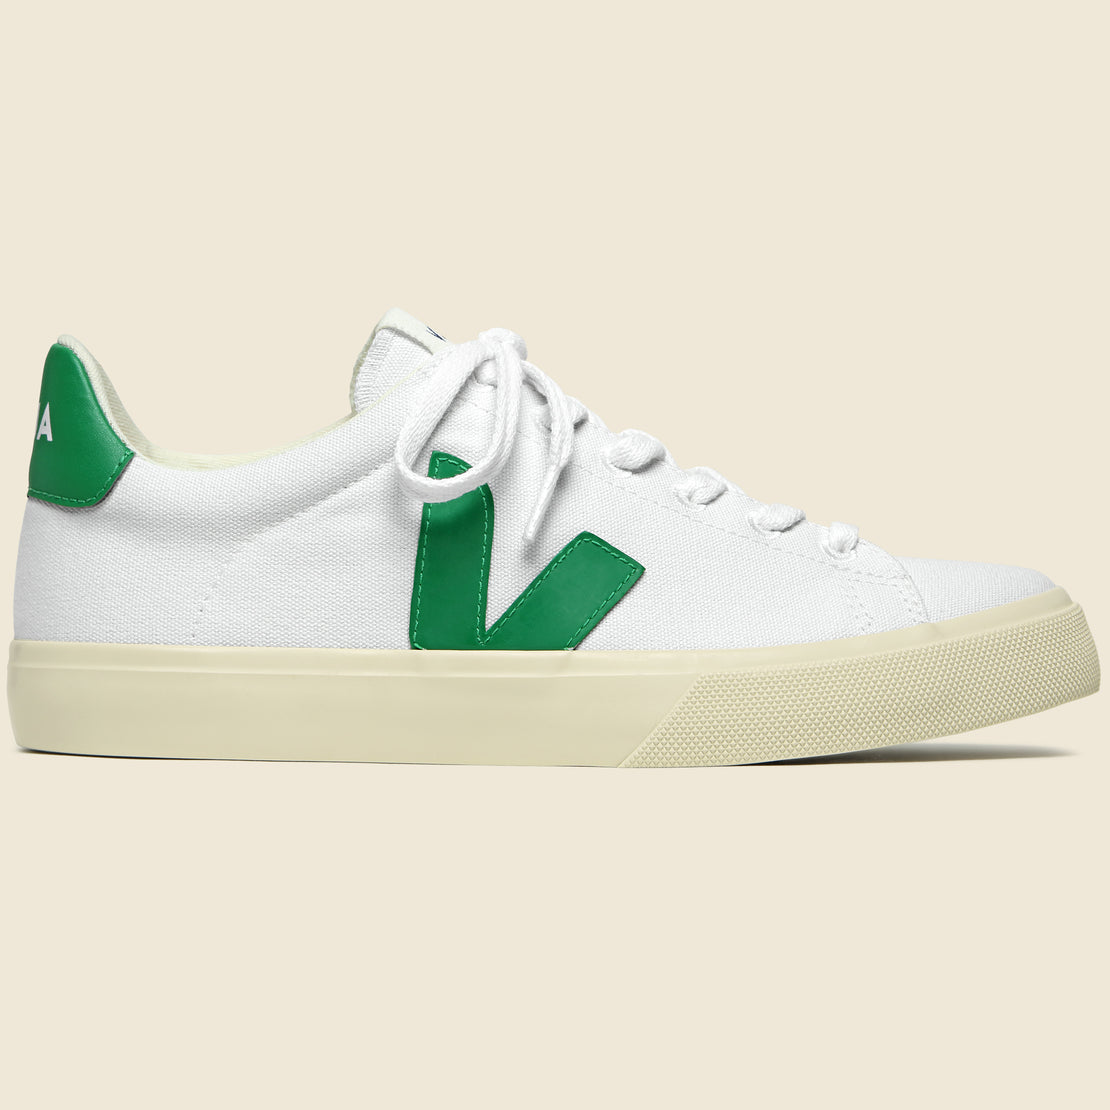 Veja Campo Canvas Sneaker - White/Emaraude